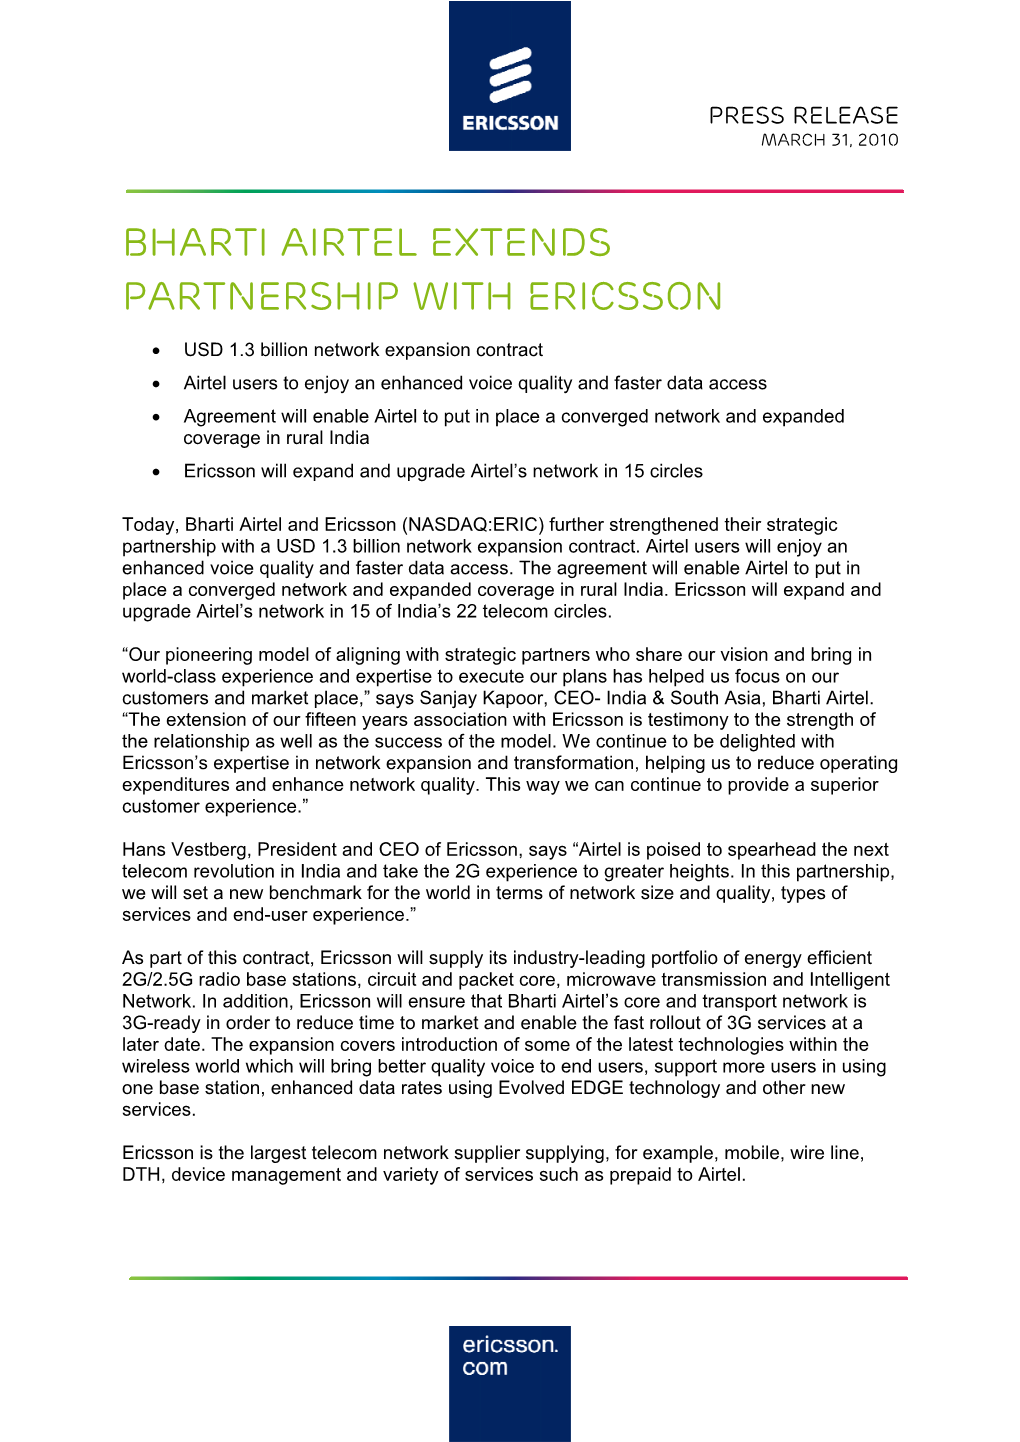 Bharti Airtel Extends Partnership with Ericsson